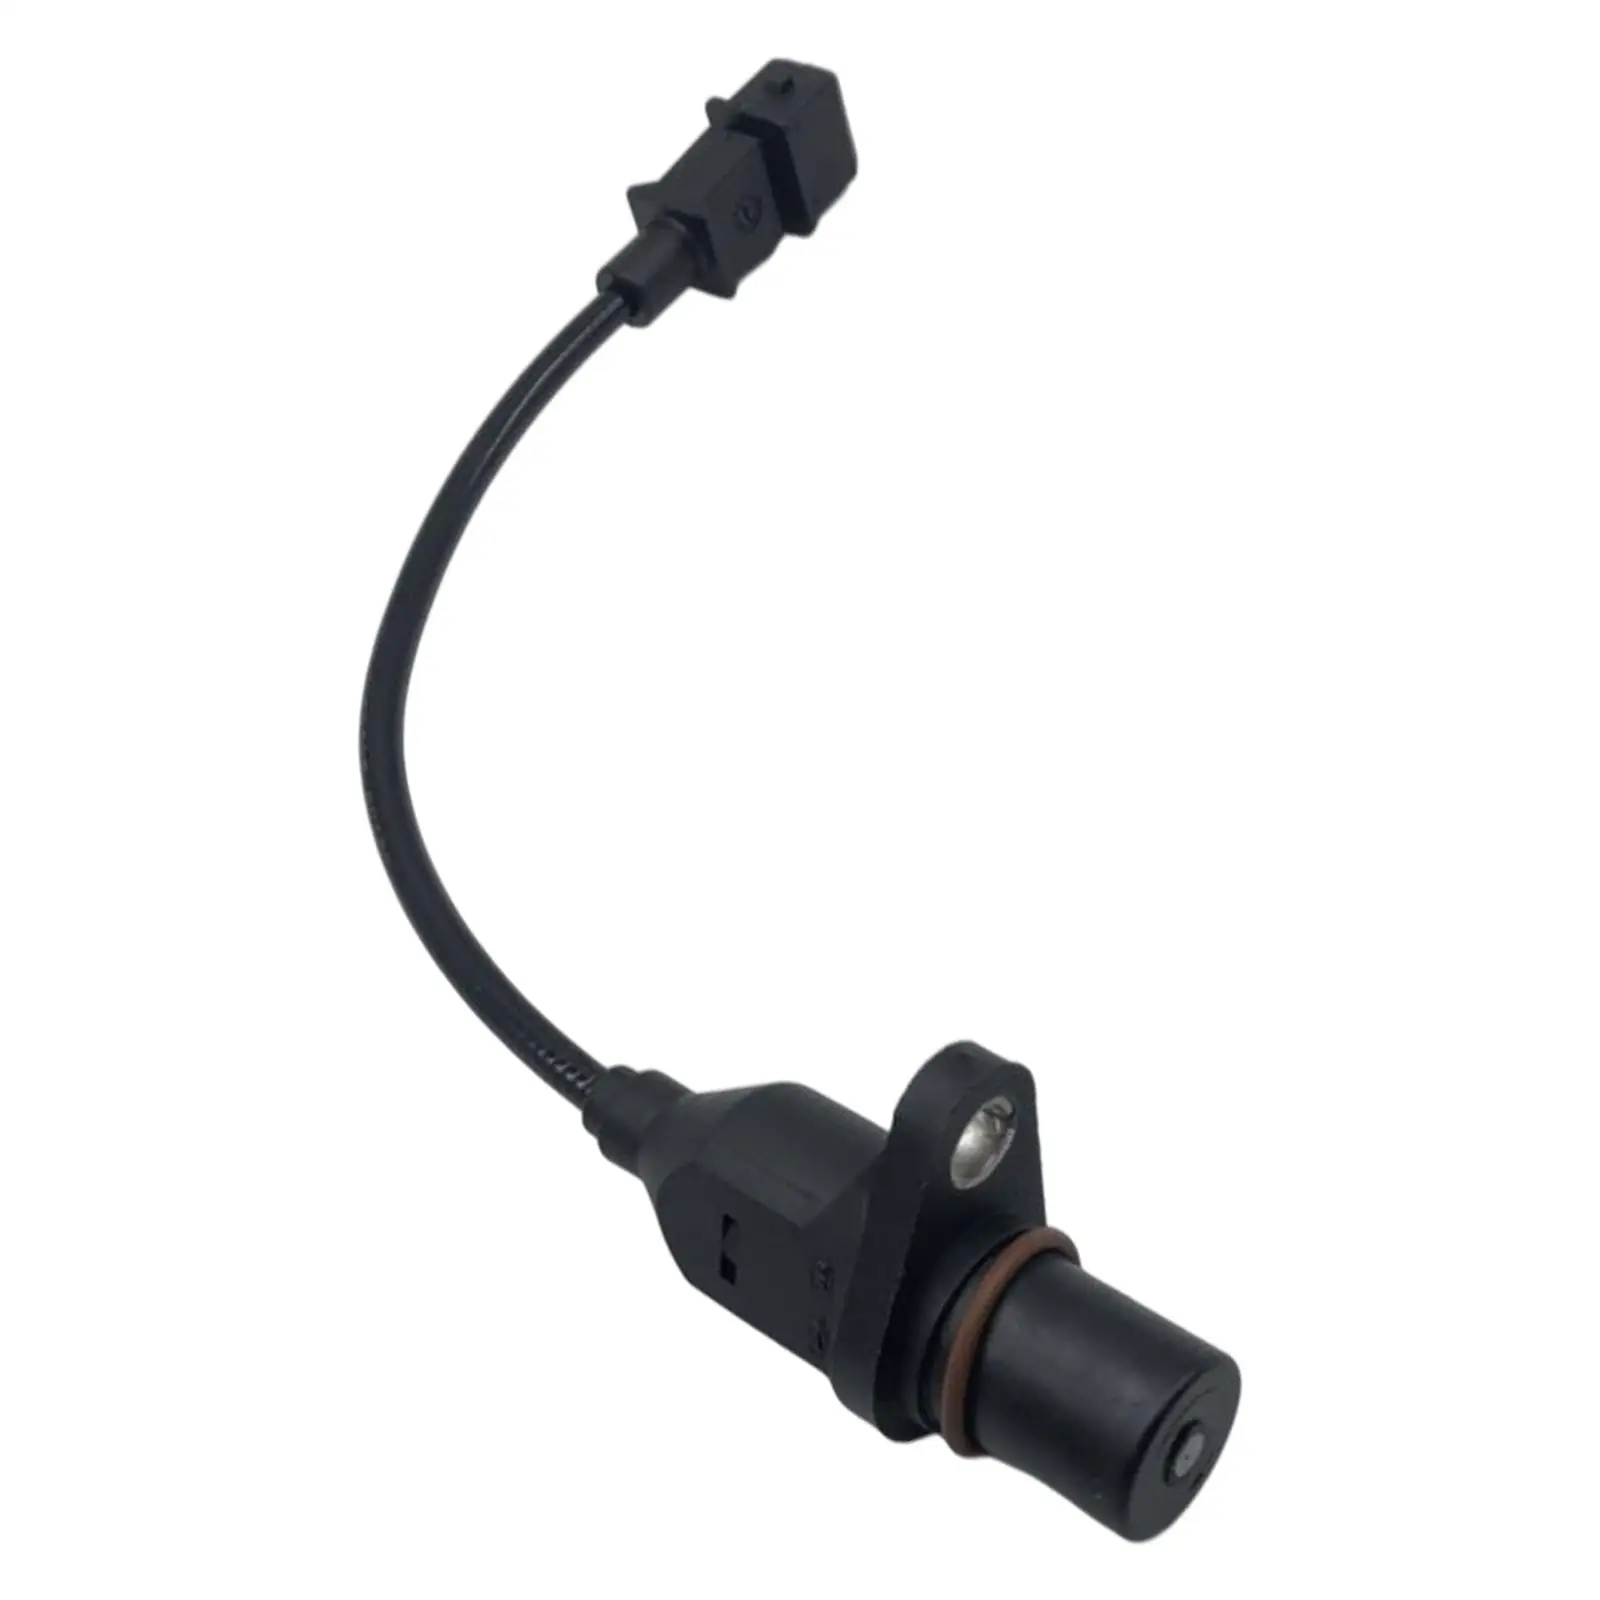  Position Sensor , Black Cps Sensor for   00-2011 39180-22600 39180 22600 Accessories Engine